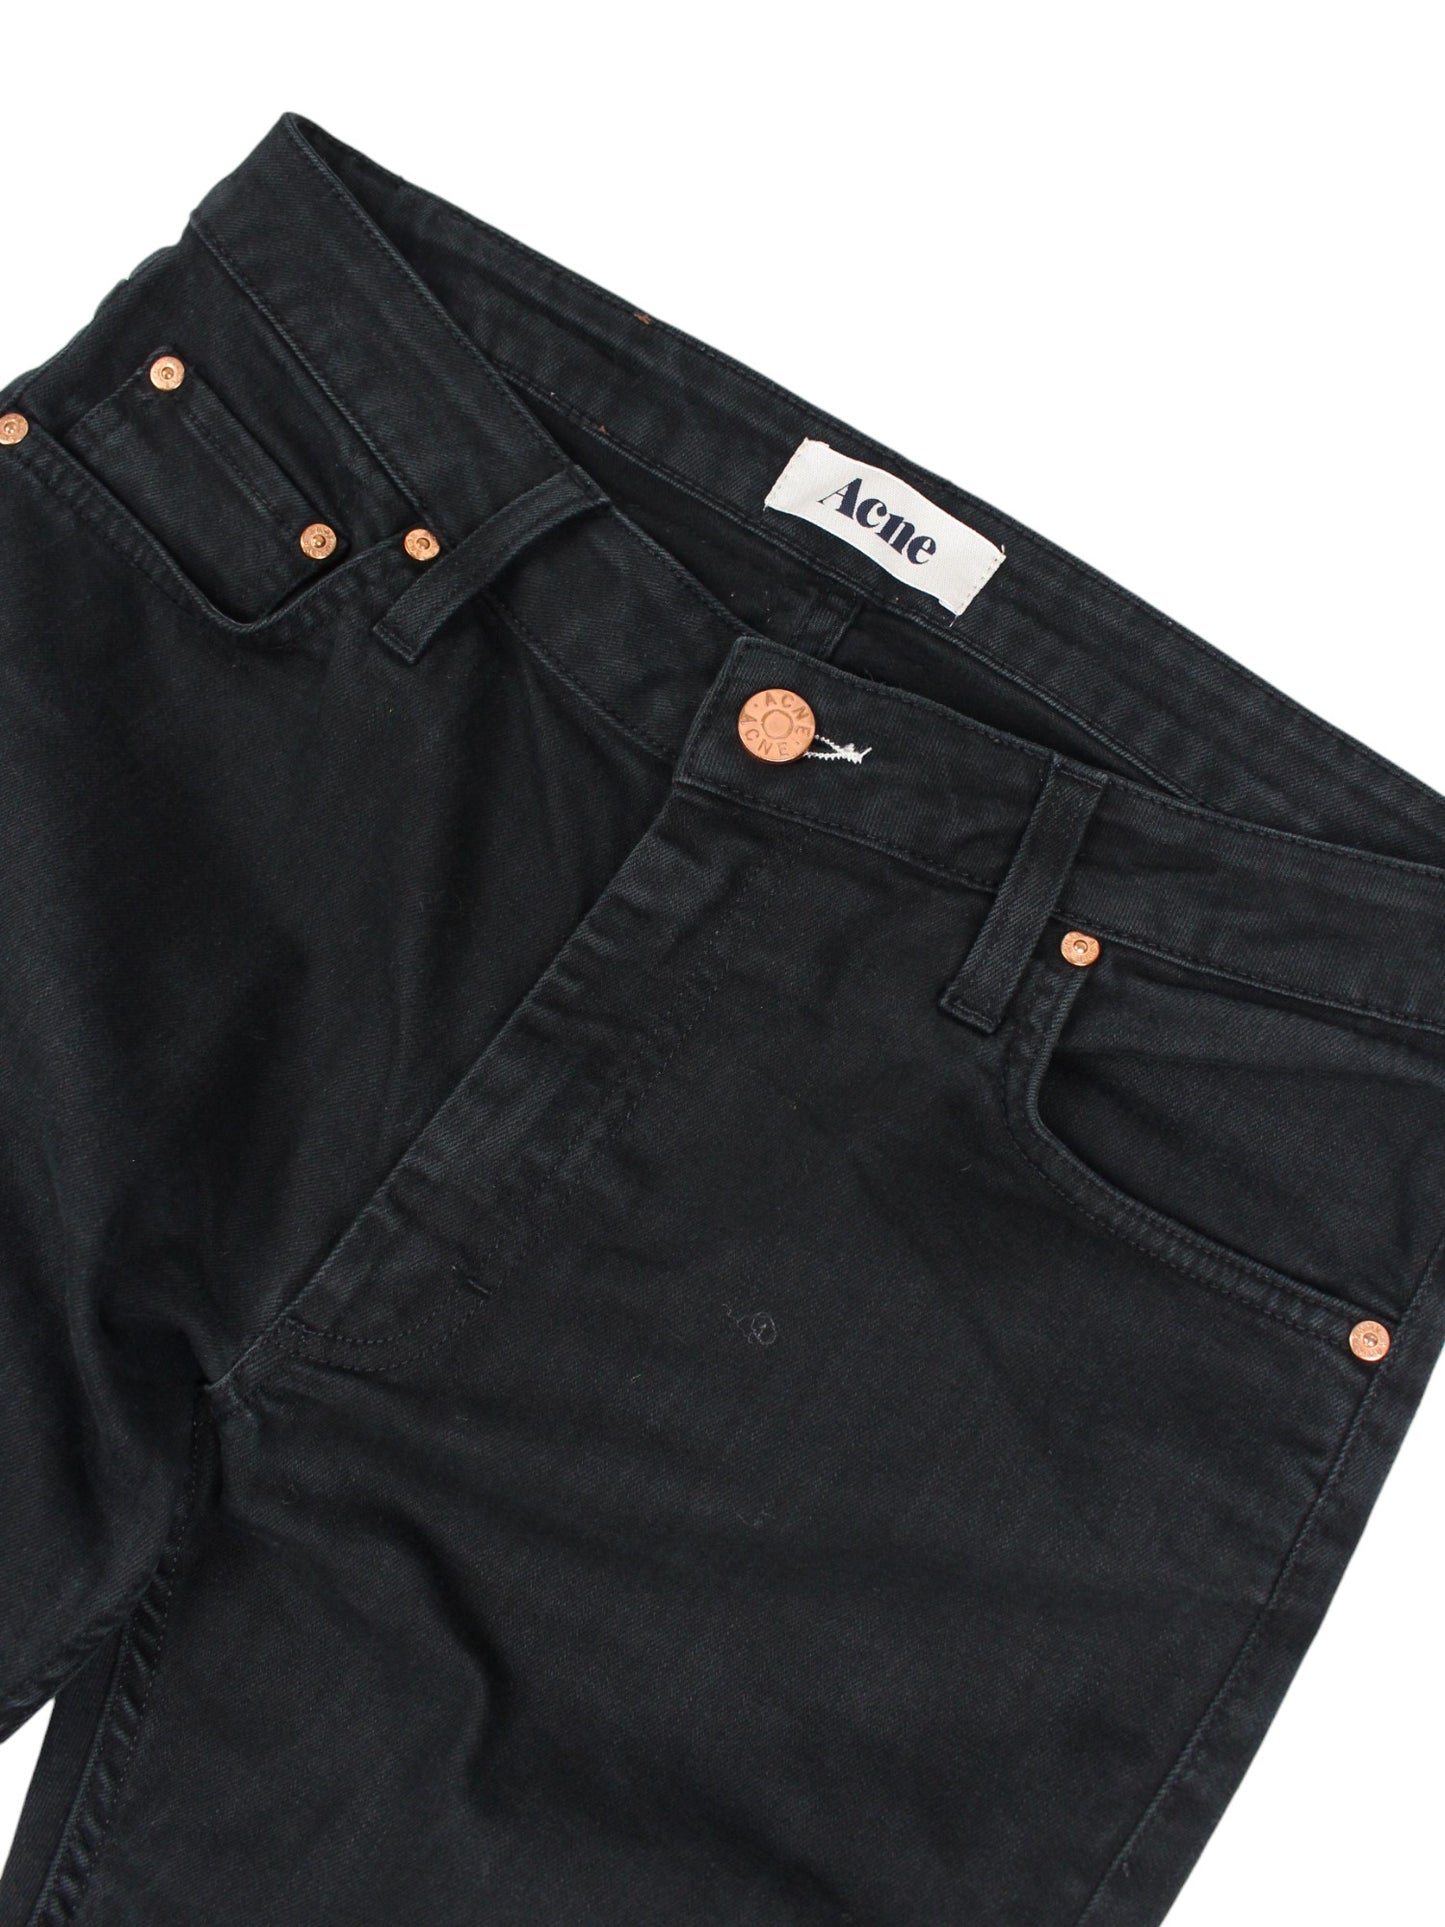 Acne Studios Black Skinny Jeans (W31" X L32")